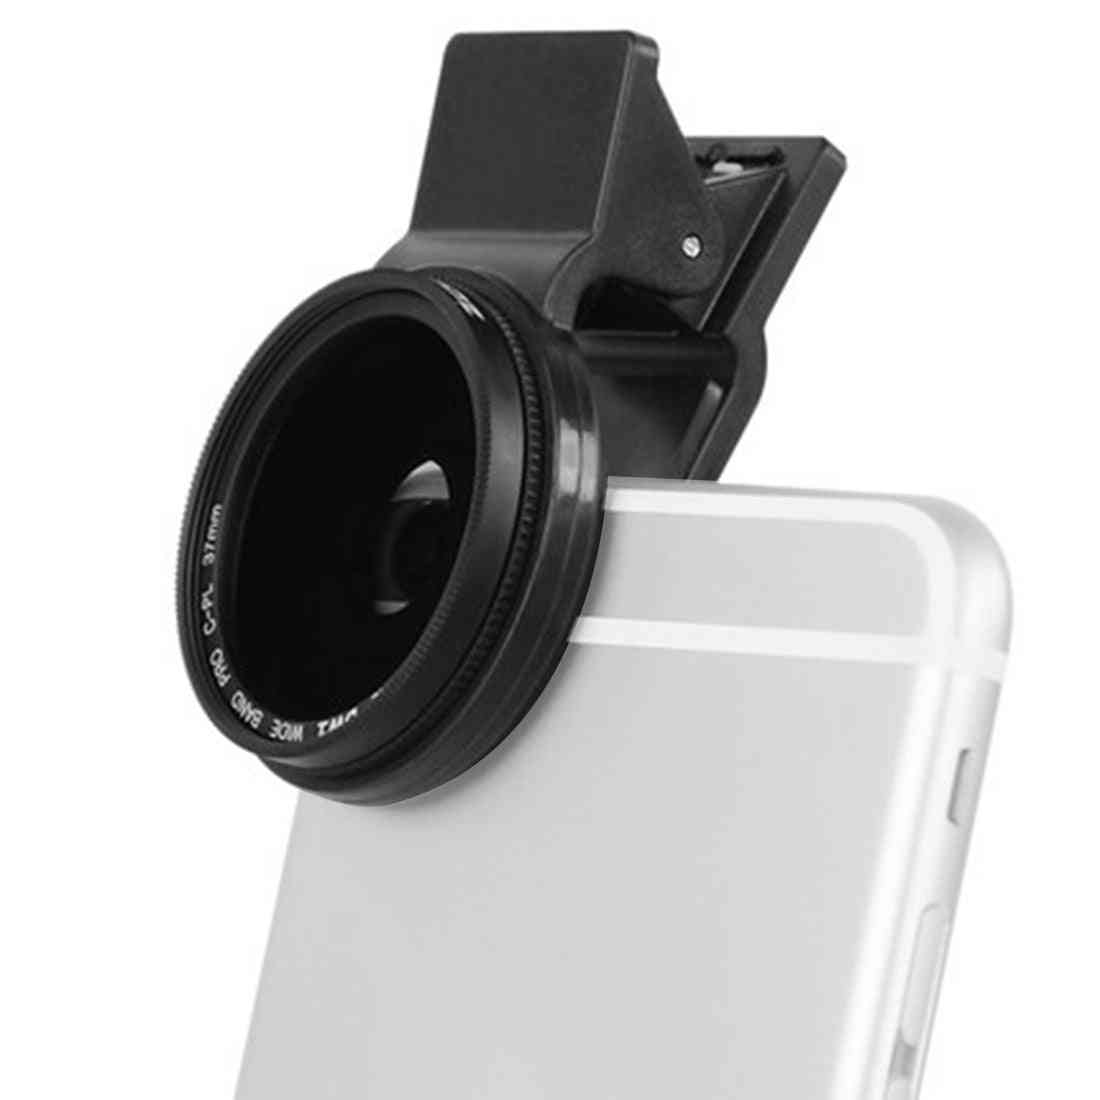 Profesionalna telefonska kamera kružni polarizator cpl-leća za iphone 7 6s plus samsung galaxy huawei htc windows android